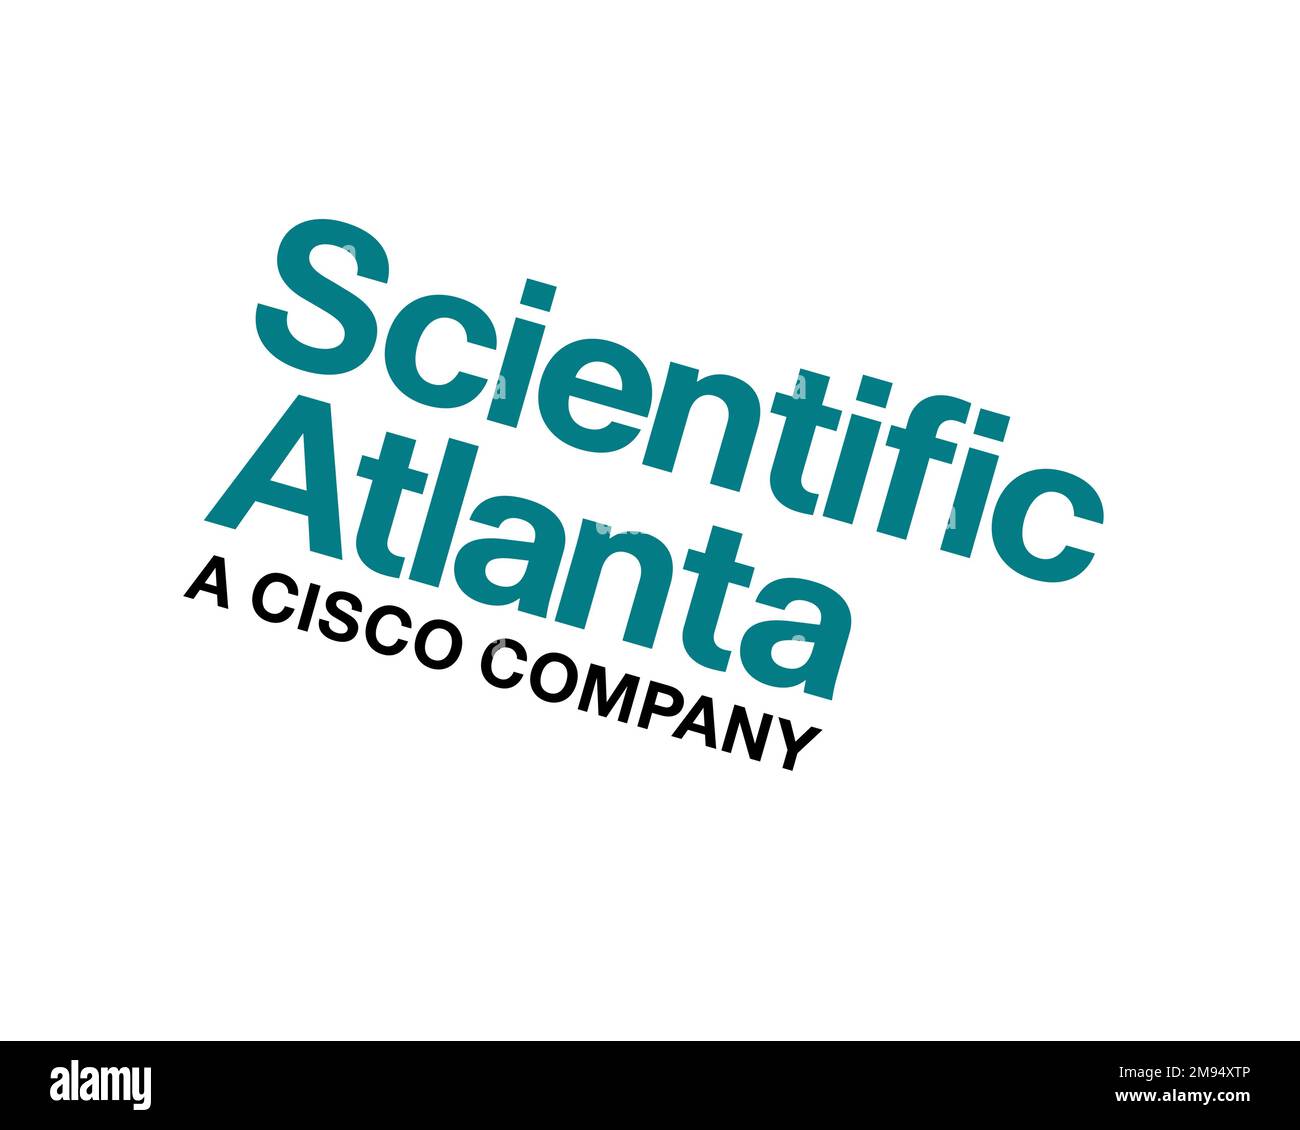 Scientific Atlanta, rotated logo, white background B Stock Photo